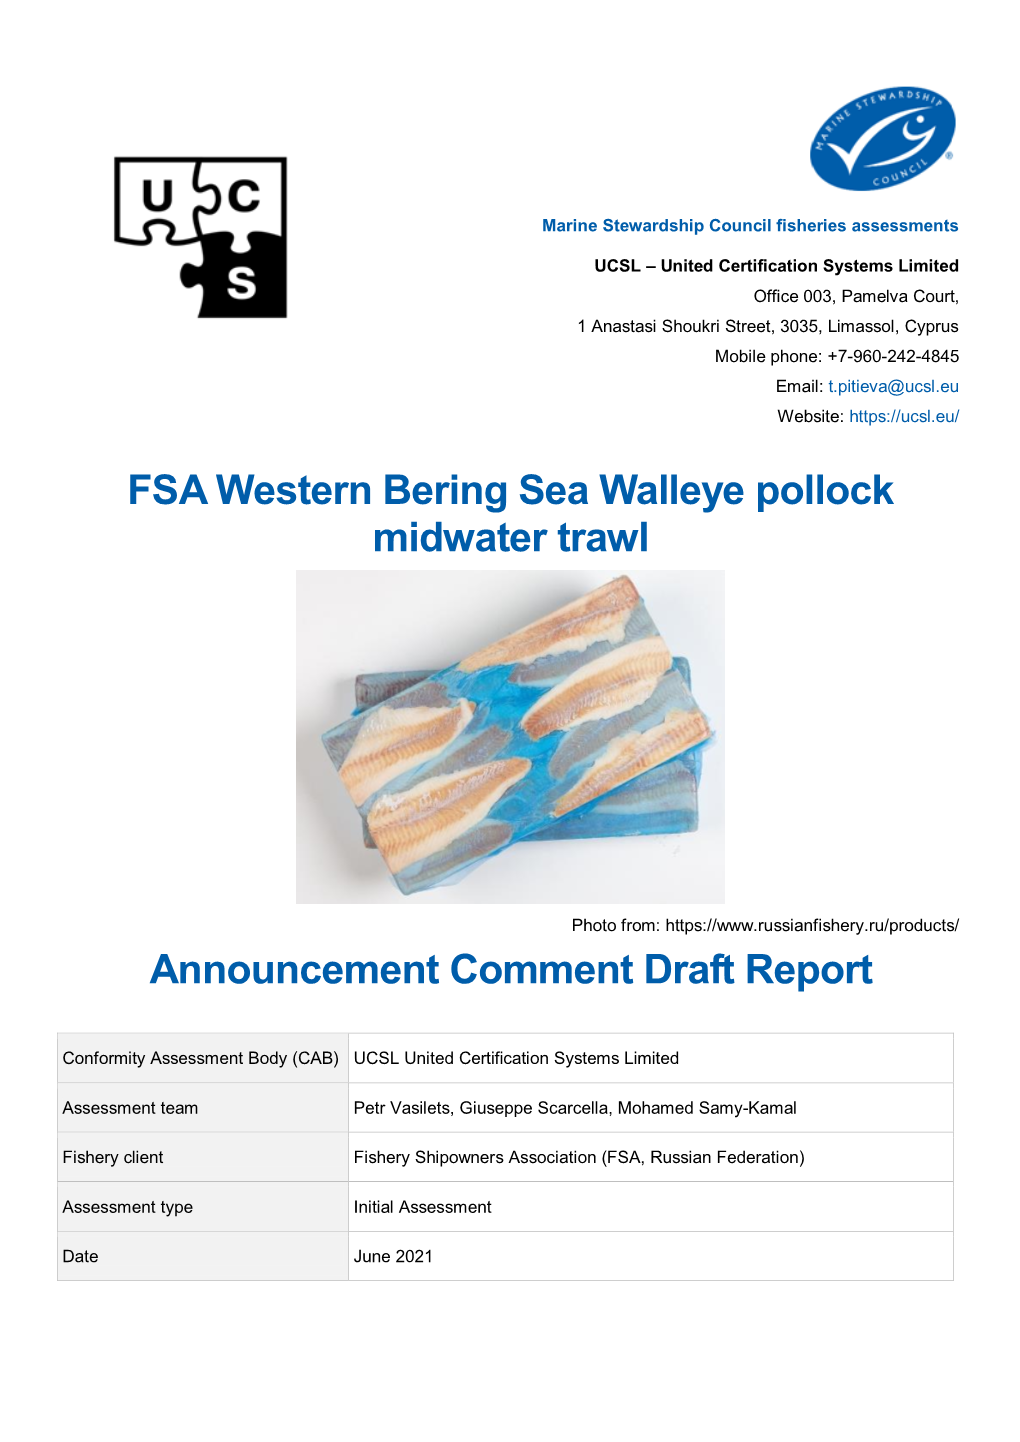 FSA Western Bering Sea Walleye Pollock Midwater Trawl